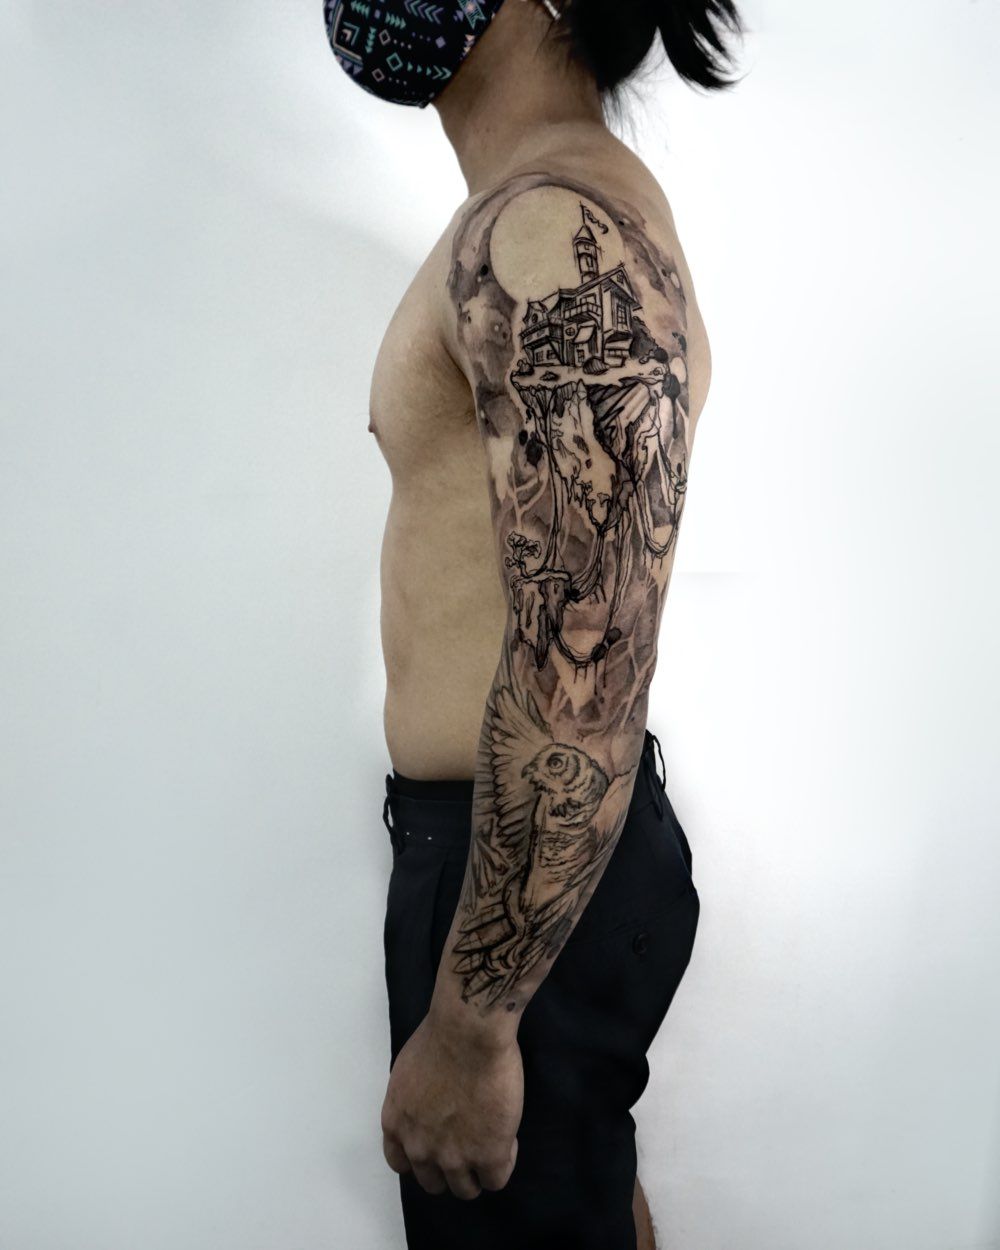 A handdrawn tattoo design in sketch style  Upwork